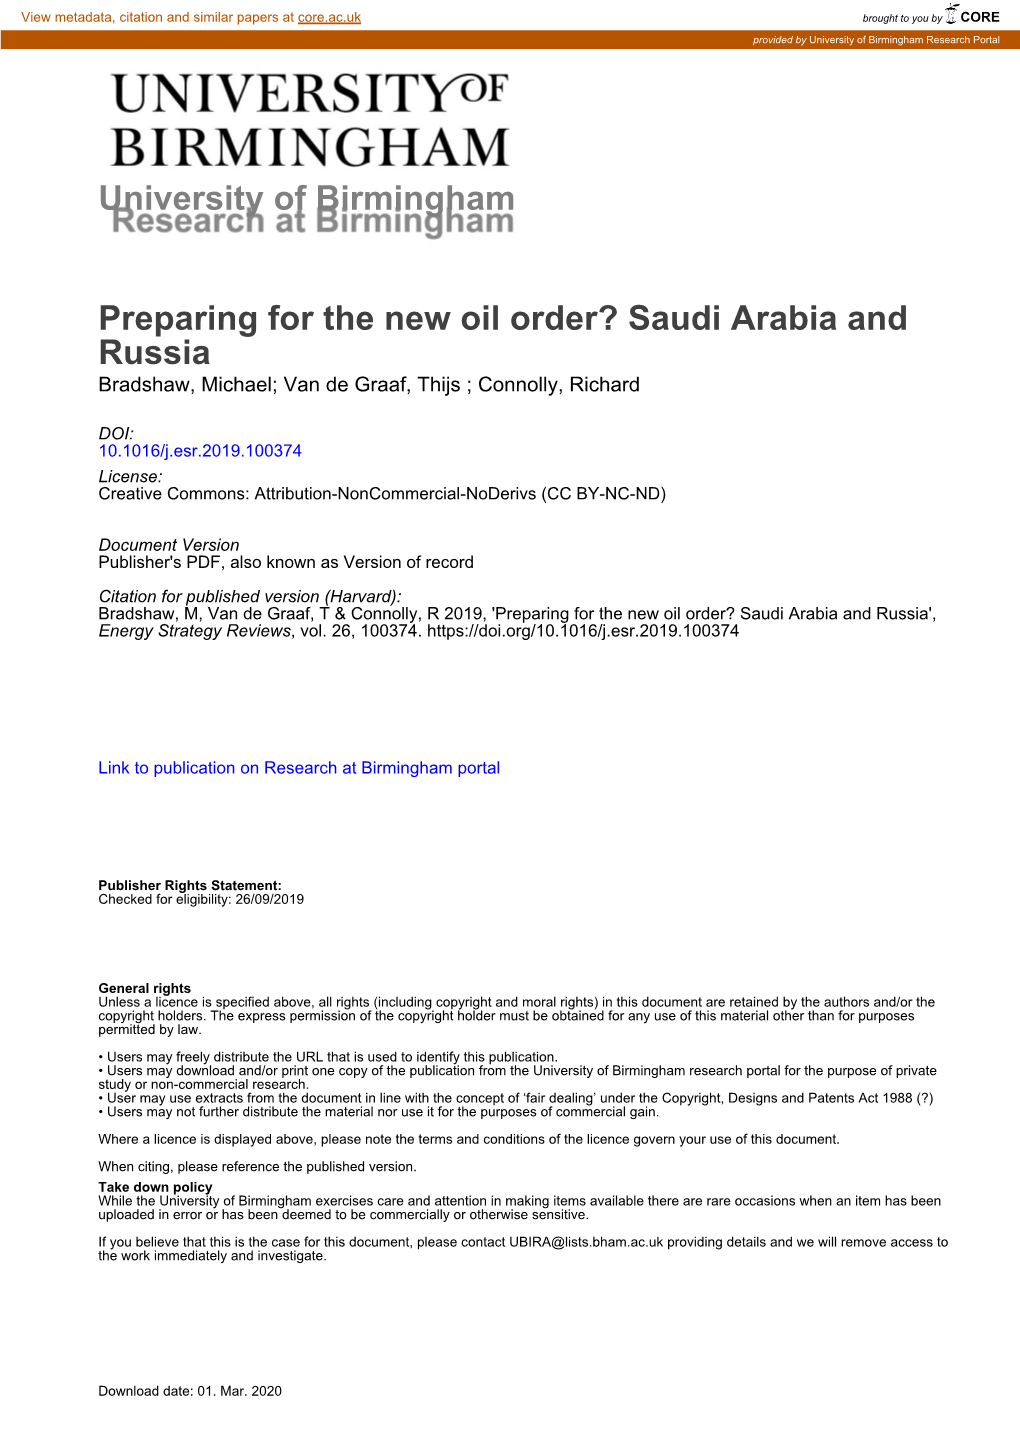 Preparing for the New Oil Order? Saudi Arabia and Russia Bradshaw, Michael; Van De Graaf, Thijs ; Connolly, Richard